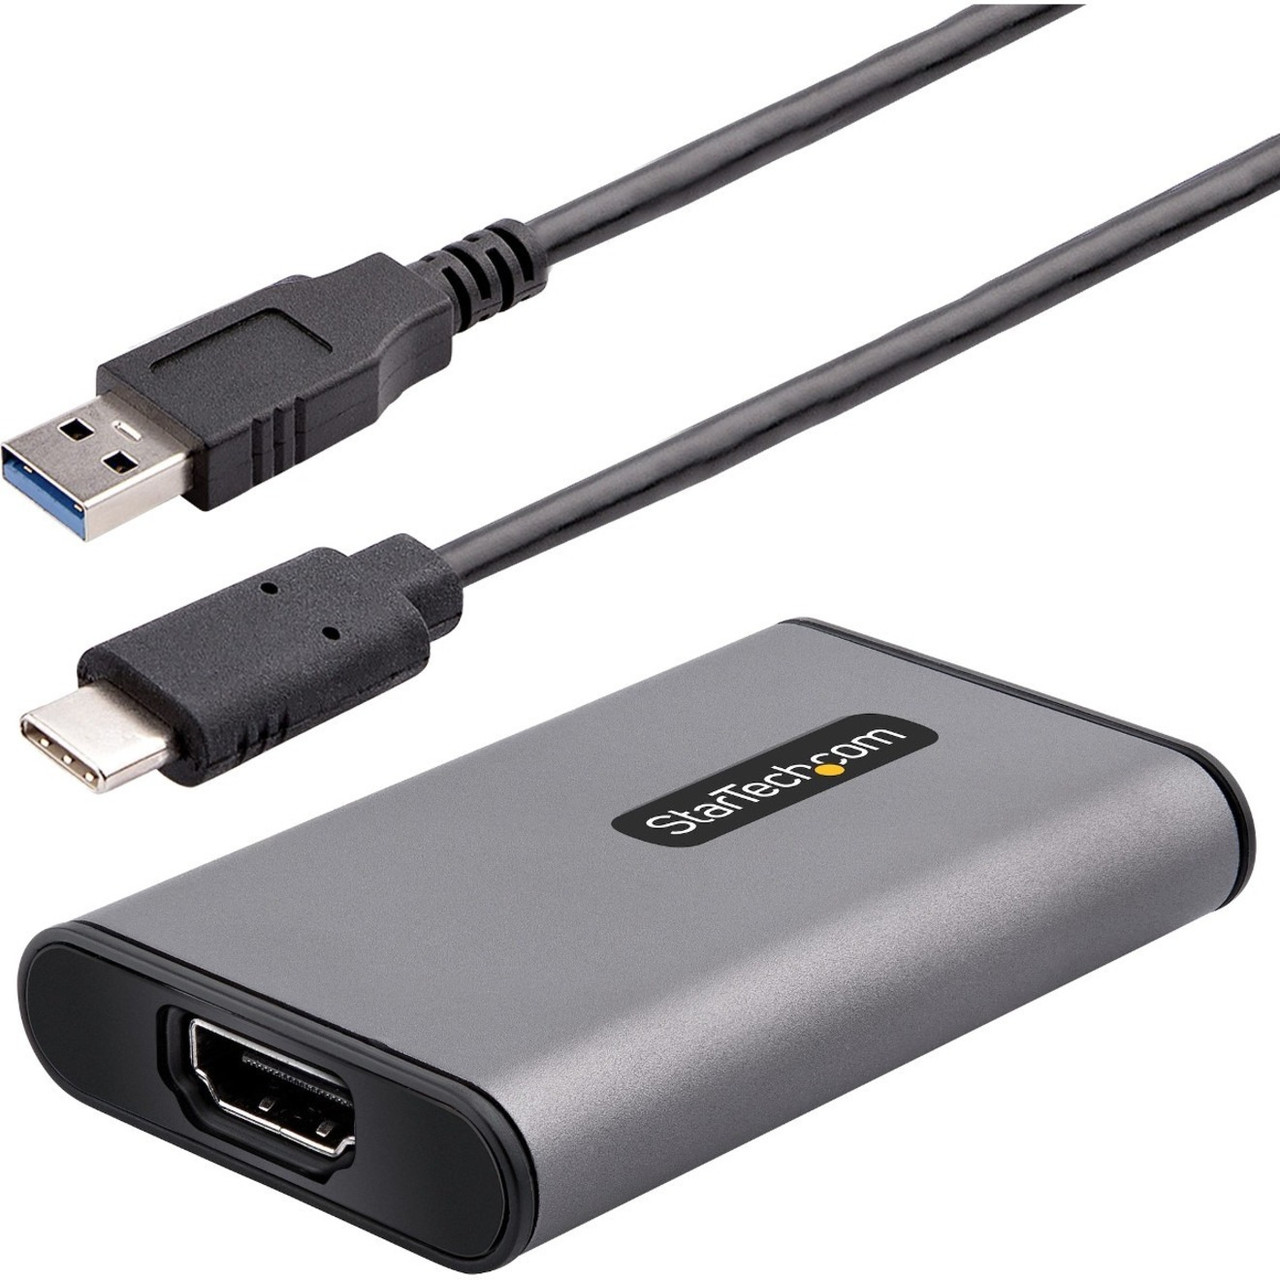 USB 3.0 HDMI Video Capture Device, 4K Video External USB Capture Card/Adapter, UVC Screen Recorder, works w/USB-A, USB-C, TB3 - 4K30-HDMI-CAPTURE